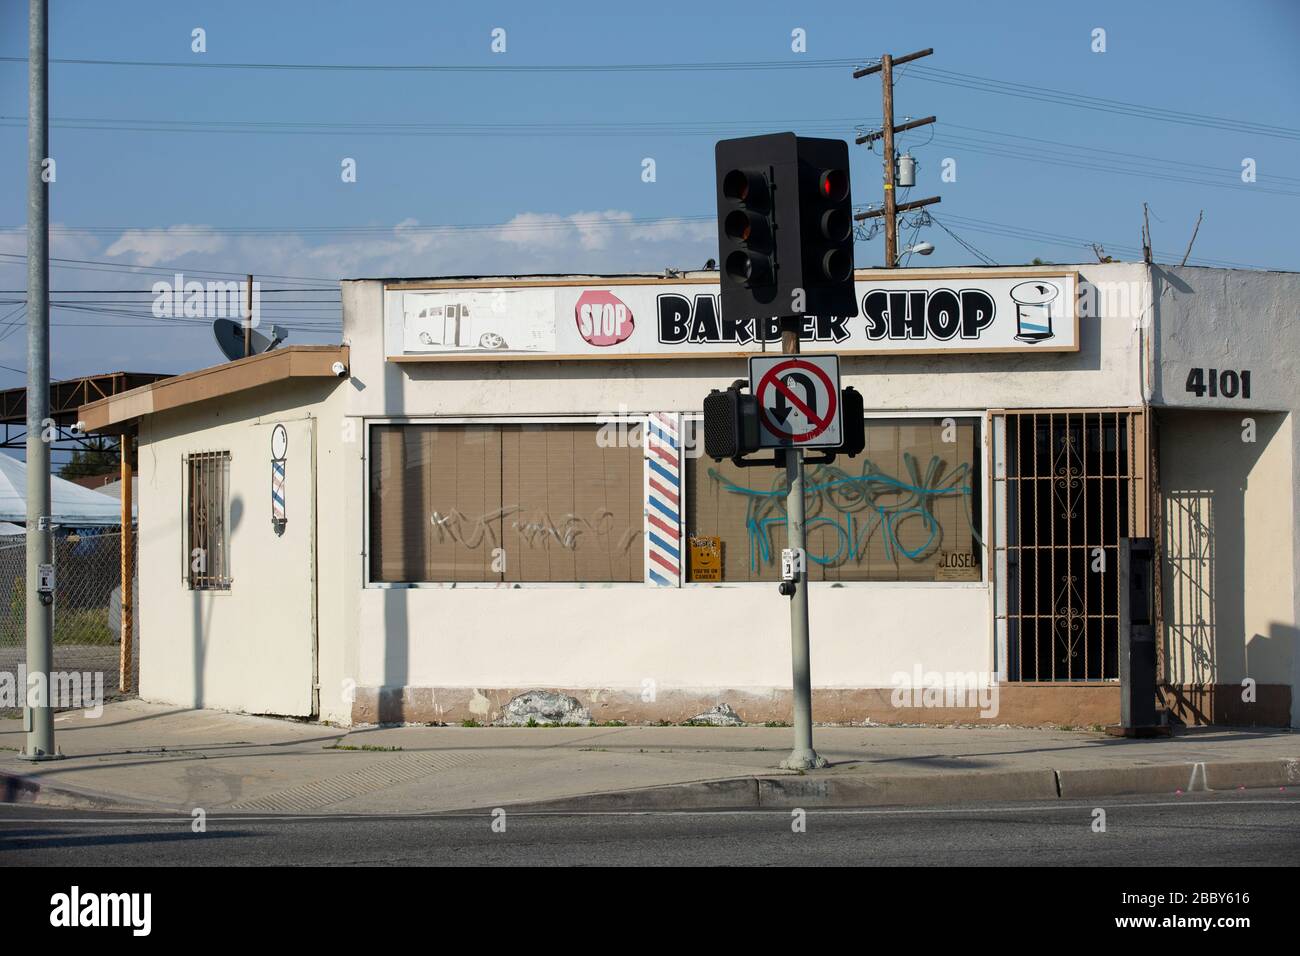 Street view of downtown Compton, California, USA. Stock Photo